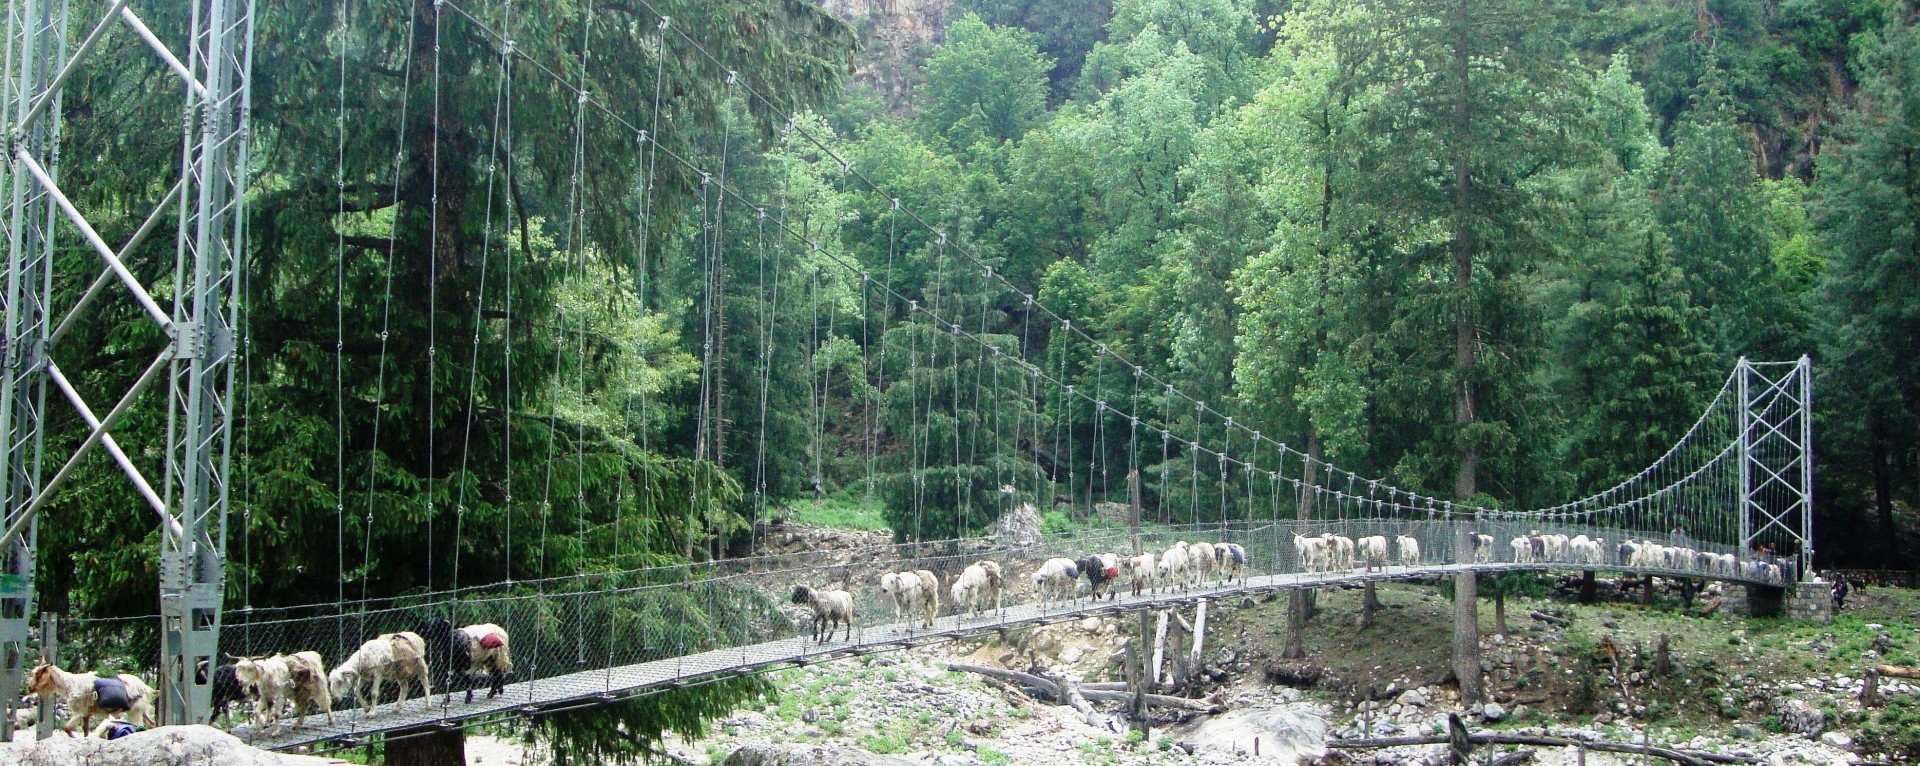 The sheep caravan crossing the suspension bridge.